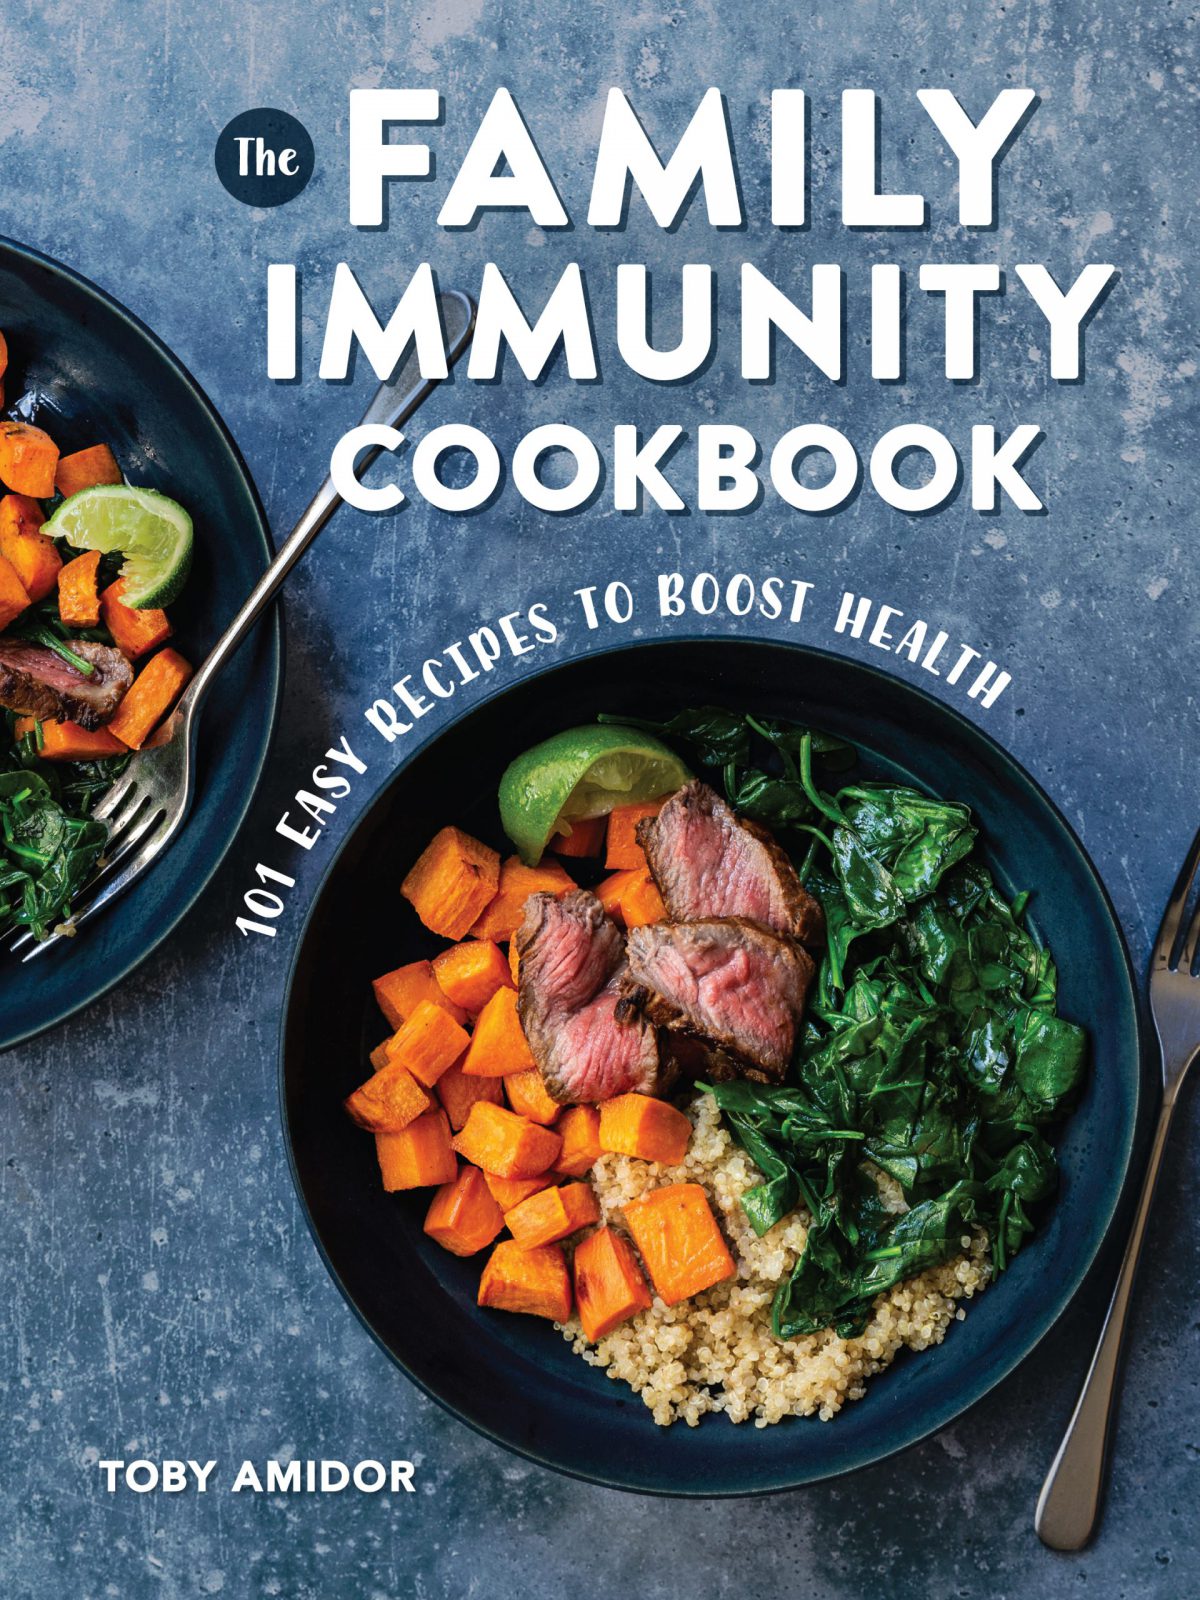 The Family Immunity Cookbook